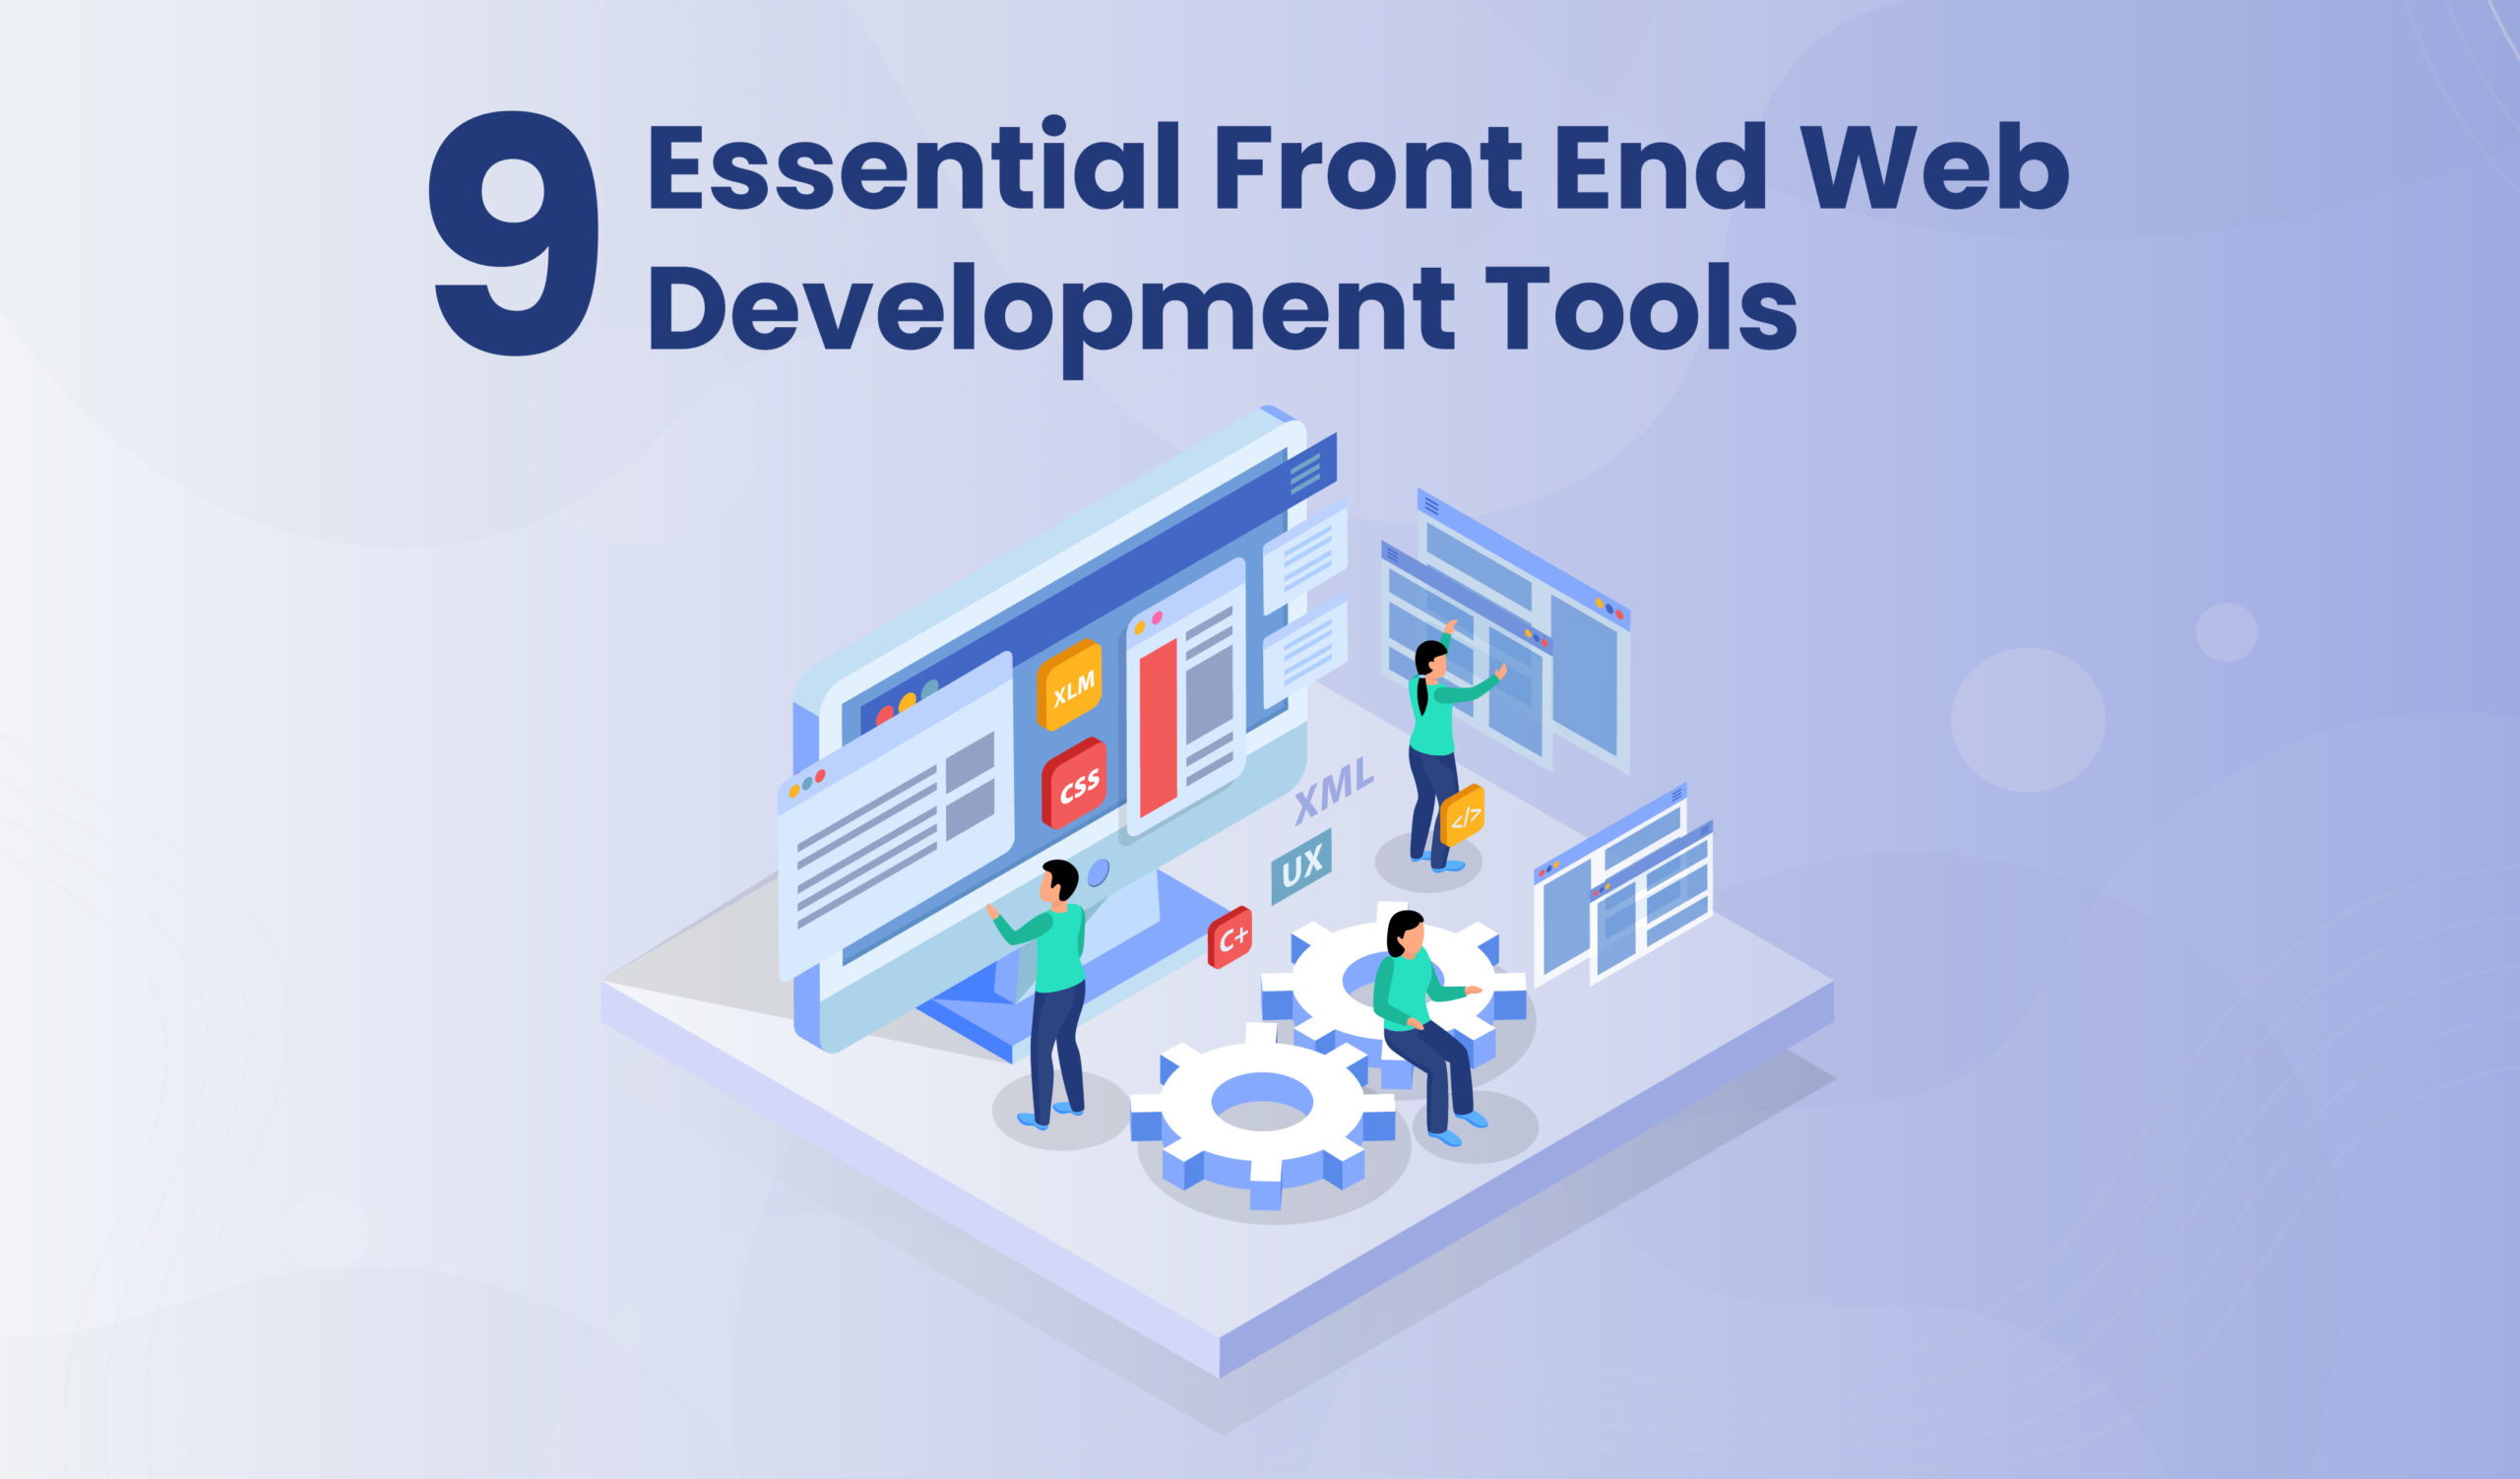 Nine essential front-end web development tools